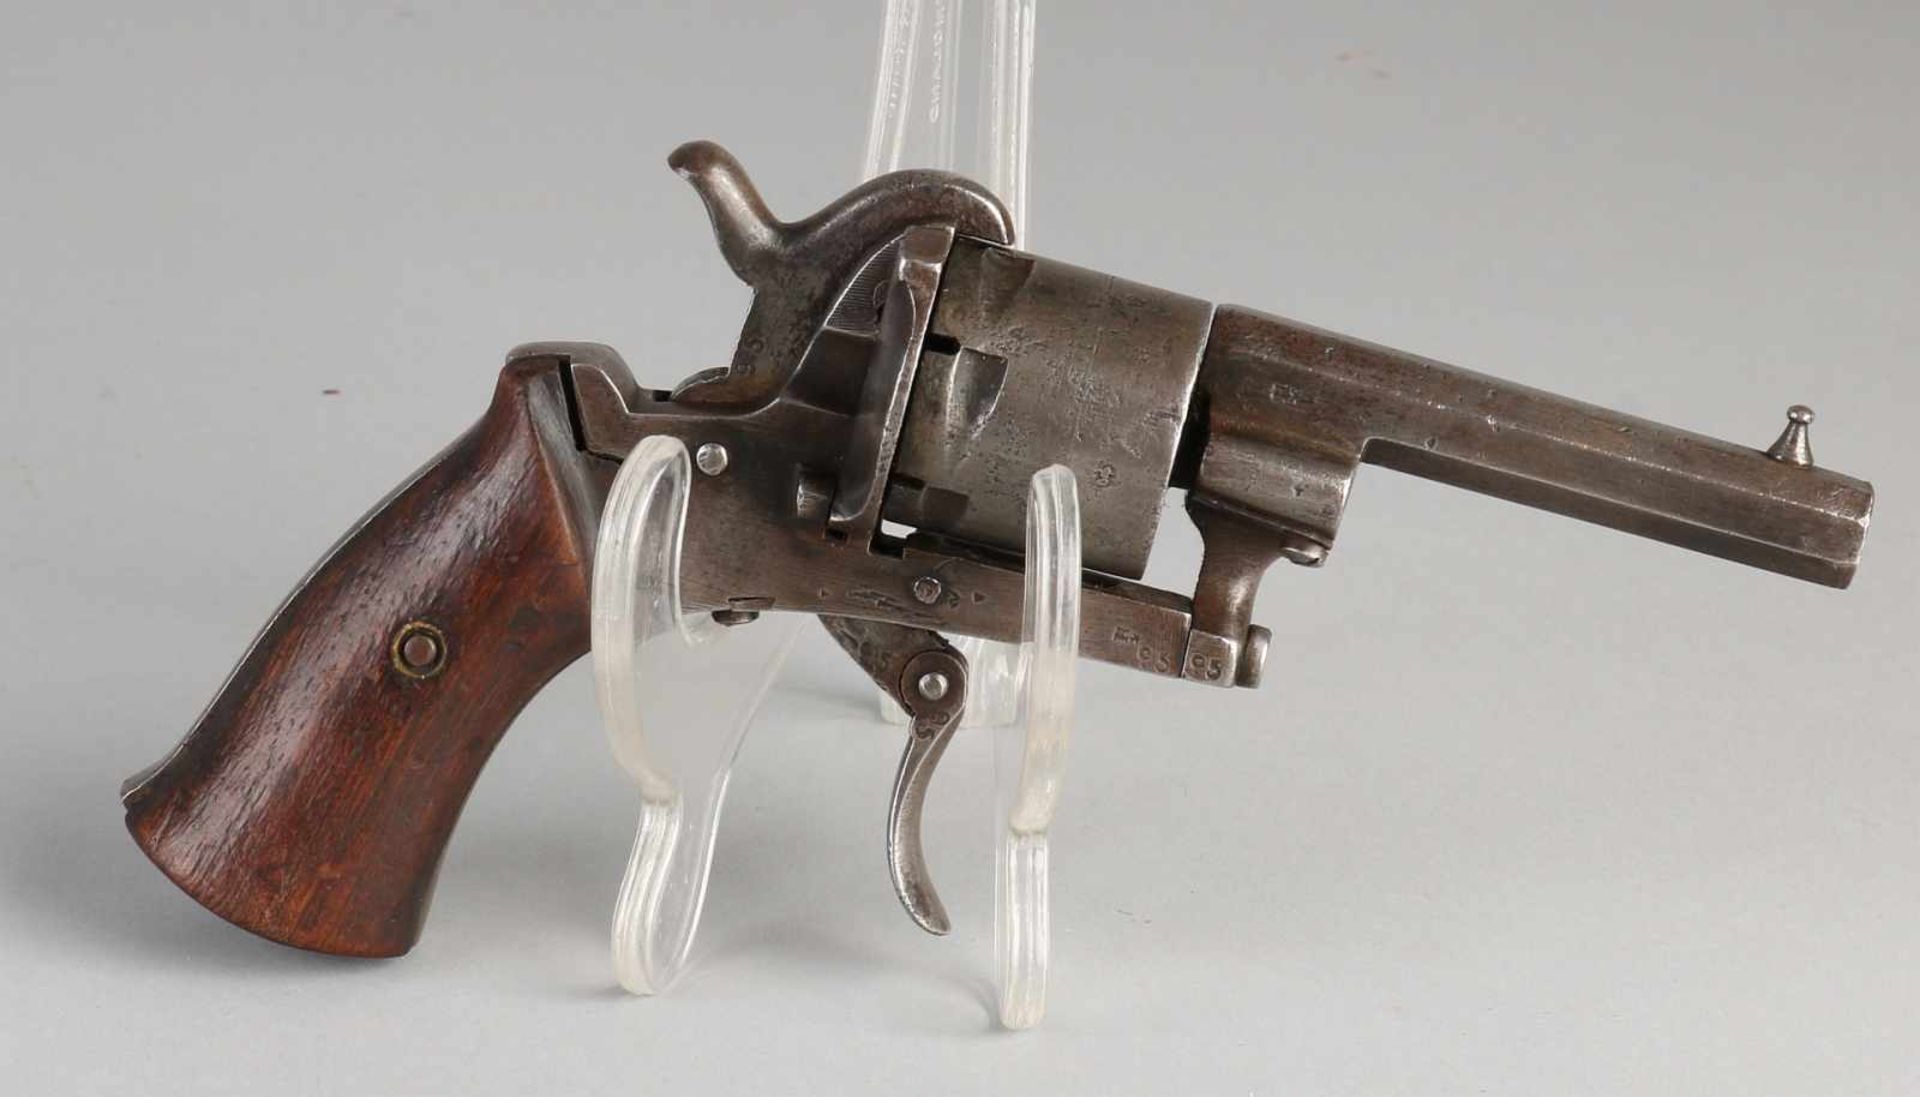 Penvuur antique revolver. Marked ELG + number. Octagonal barrel. Size: L 16 cm. In good condition.